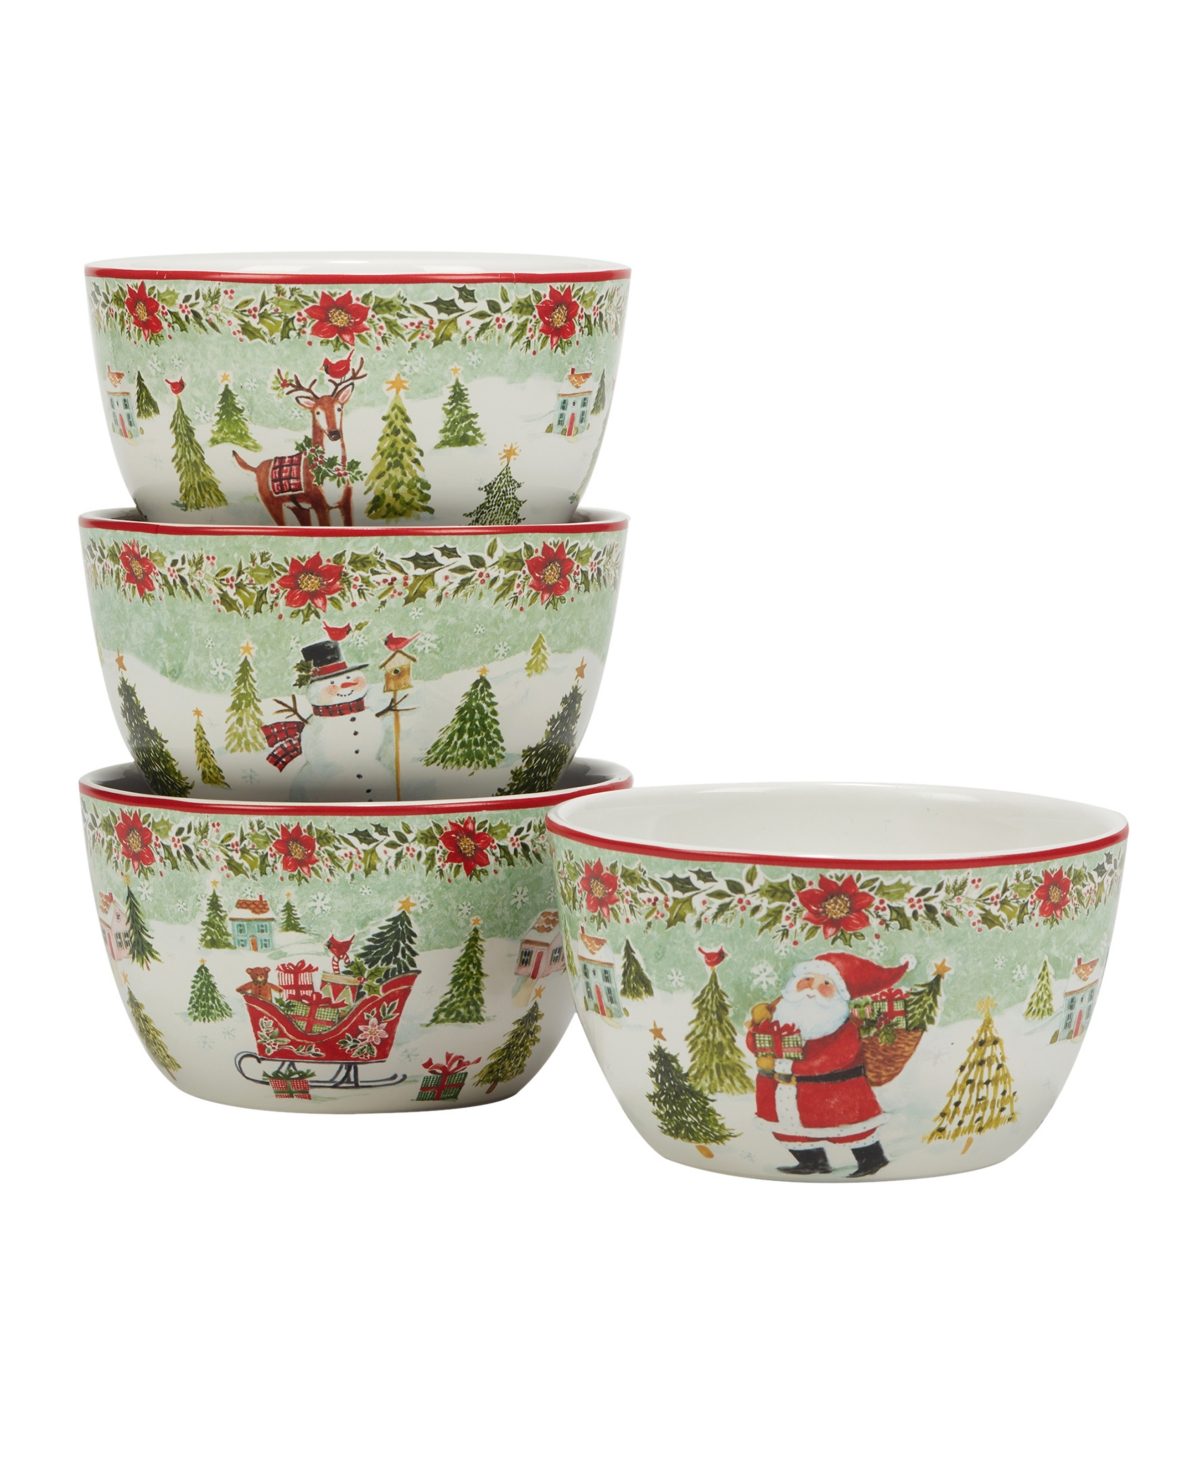 Joy of Christmas 24 oz Ice Cream Bowls Set of 4 - Red